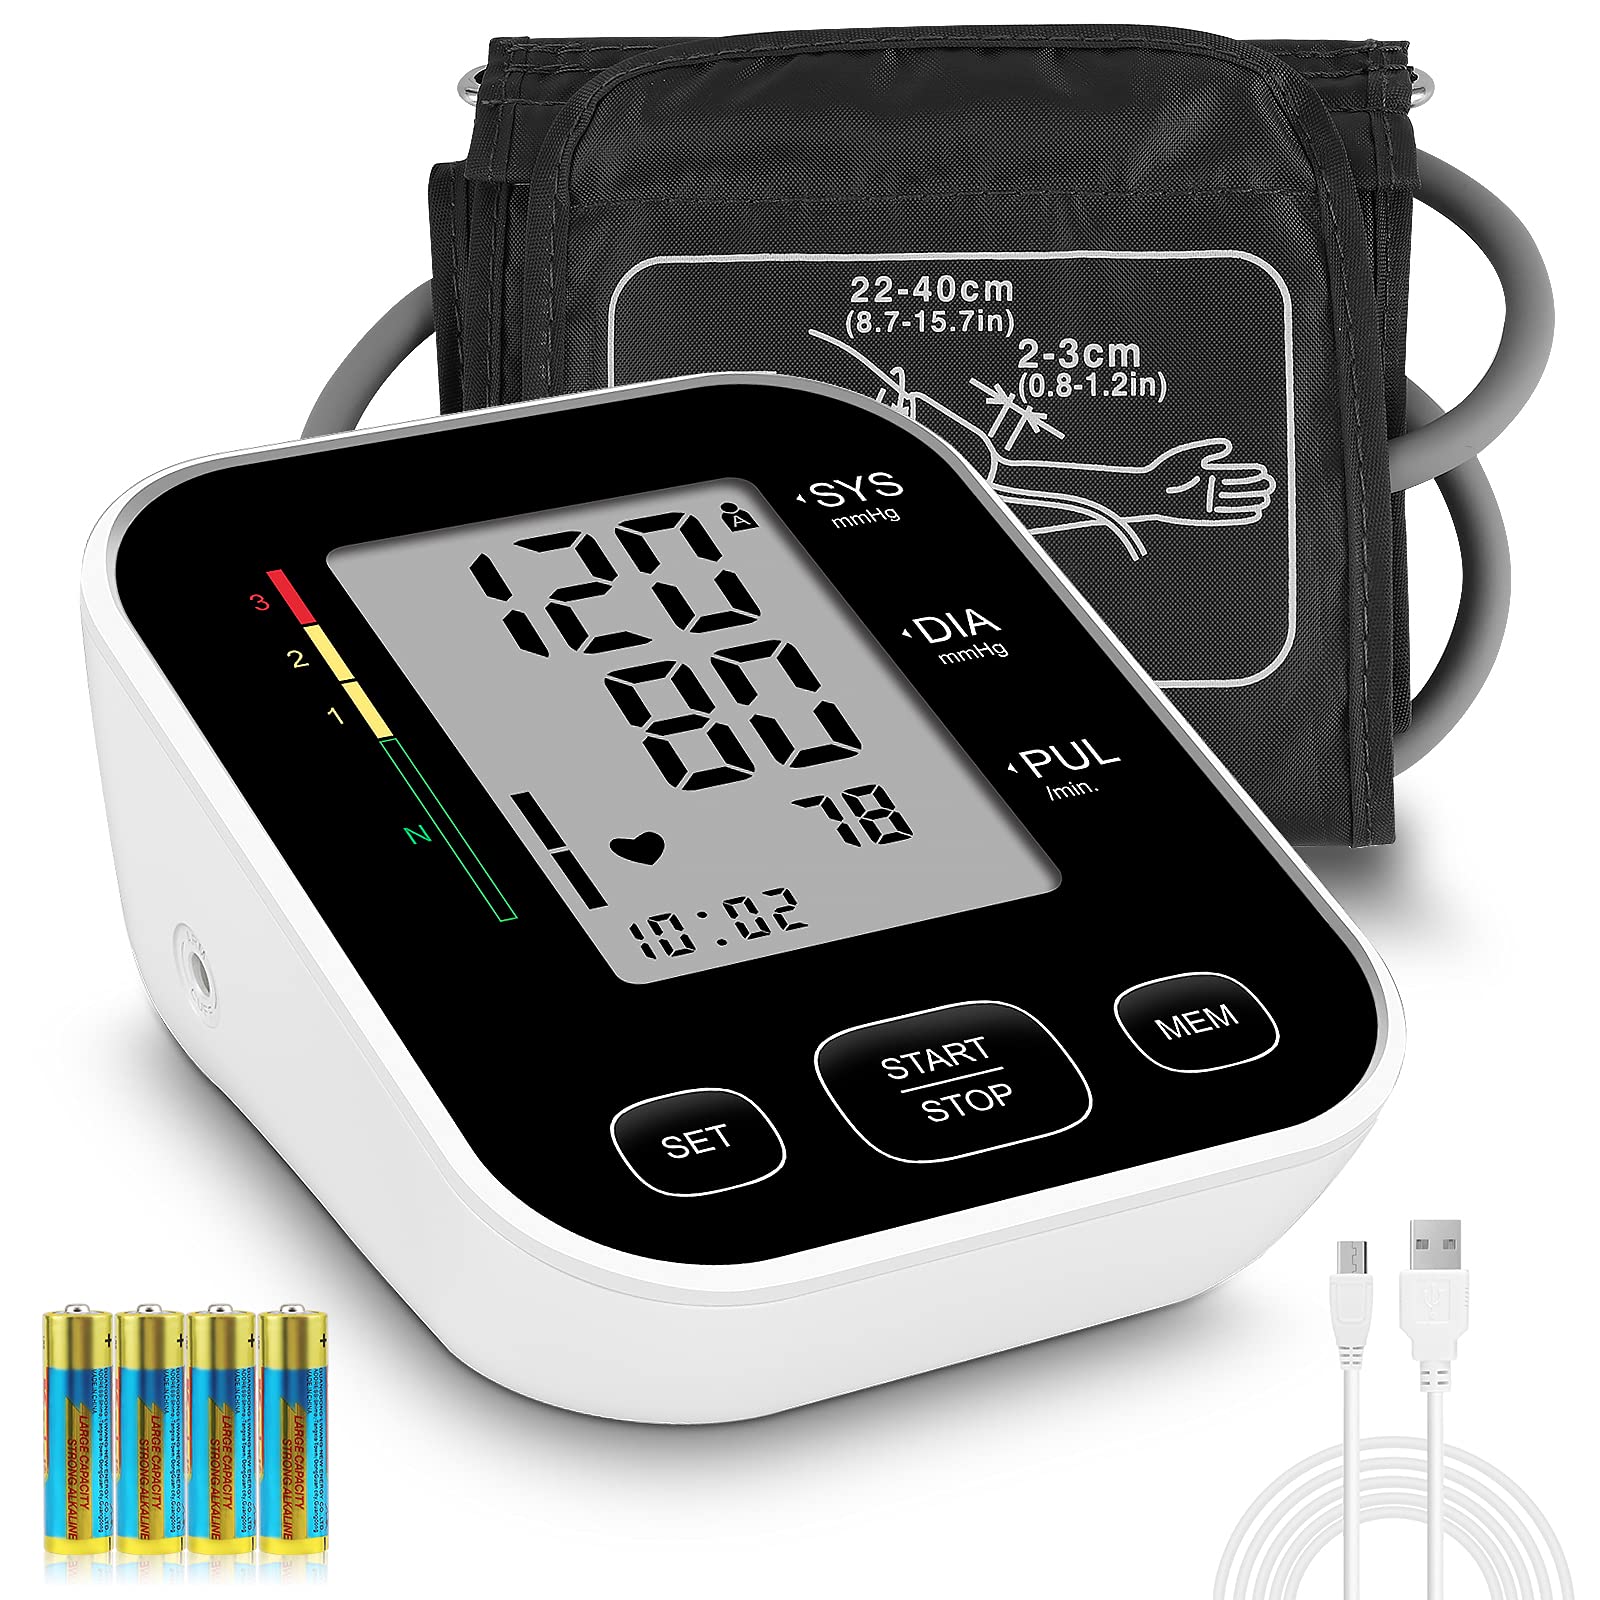 Digital Upper Arm Automatic Blood Pressure Monitor w/ LCD Display